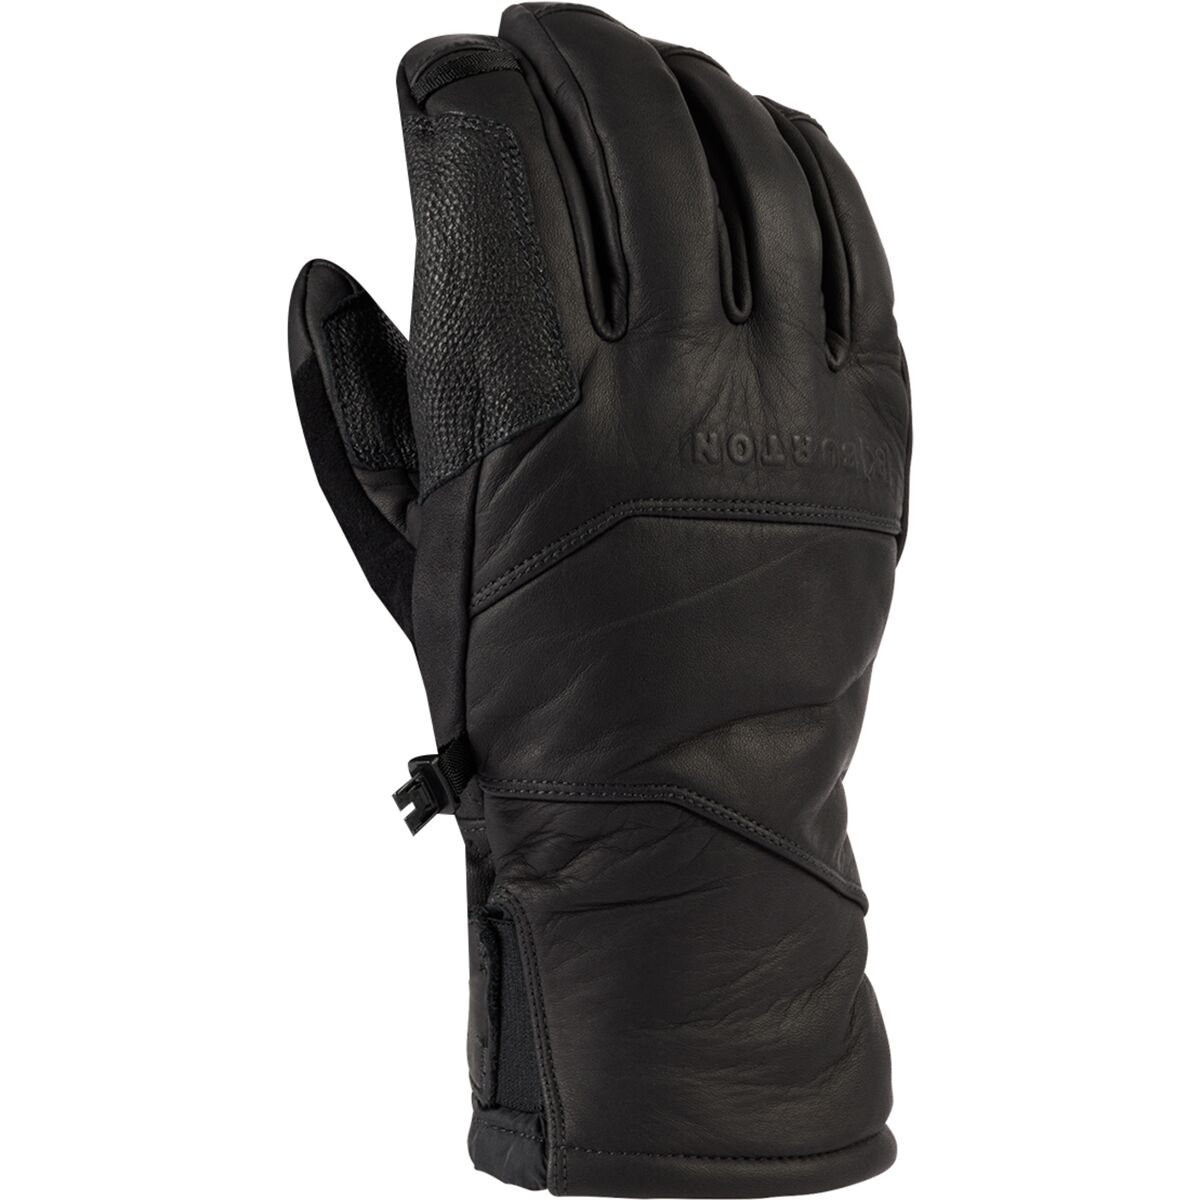 Burton Clutch GORE-TEX Leather Glove - Men's True Black